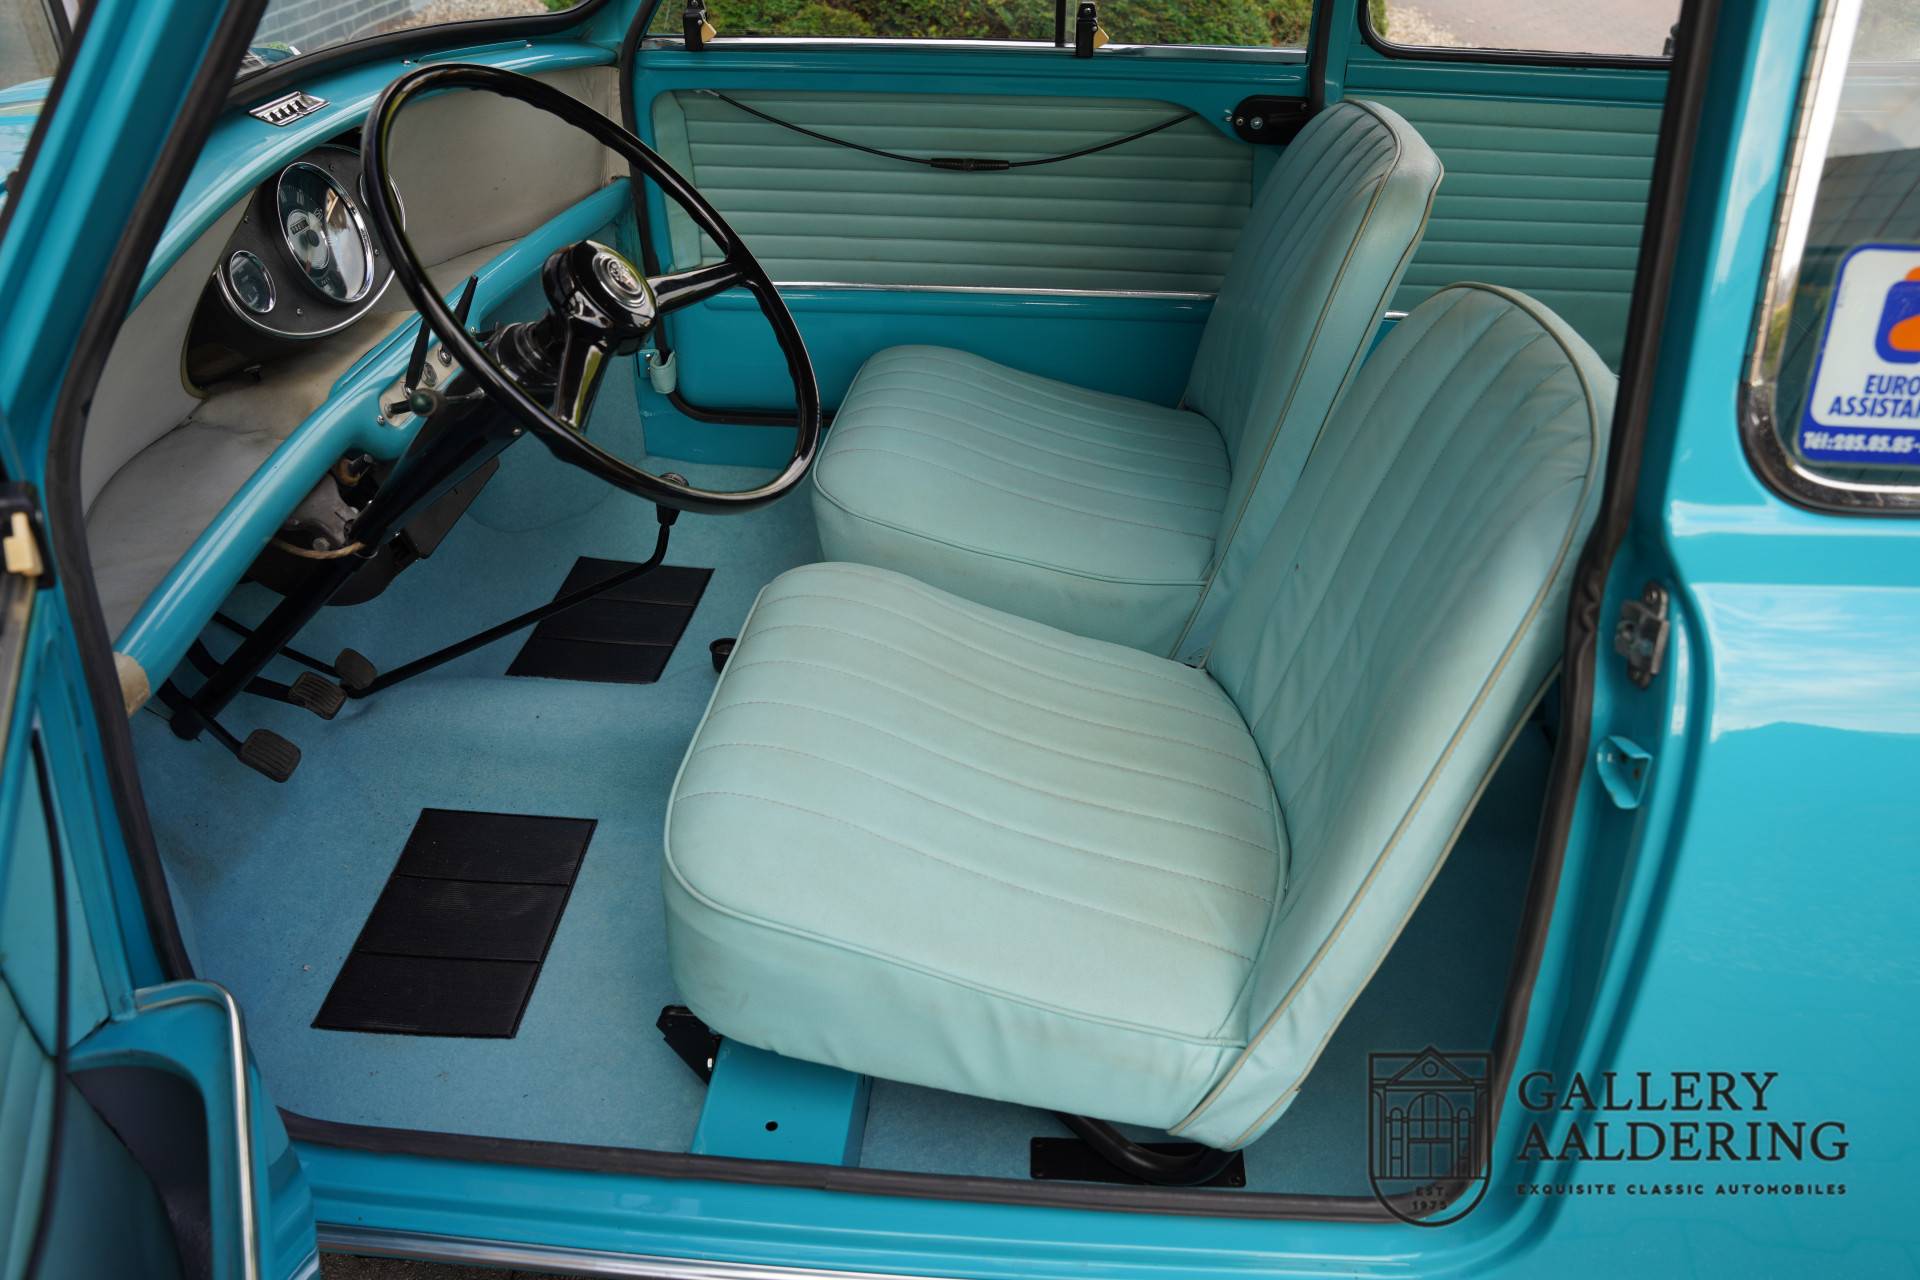 Austin Mini De Luxe 1964 à vendre - Gallery Aaldering